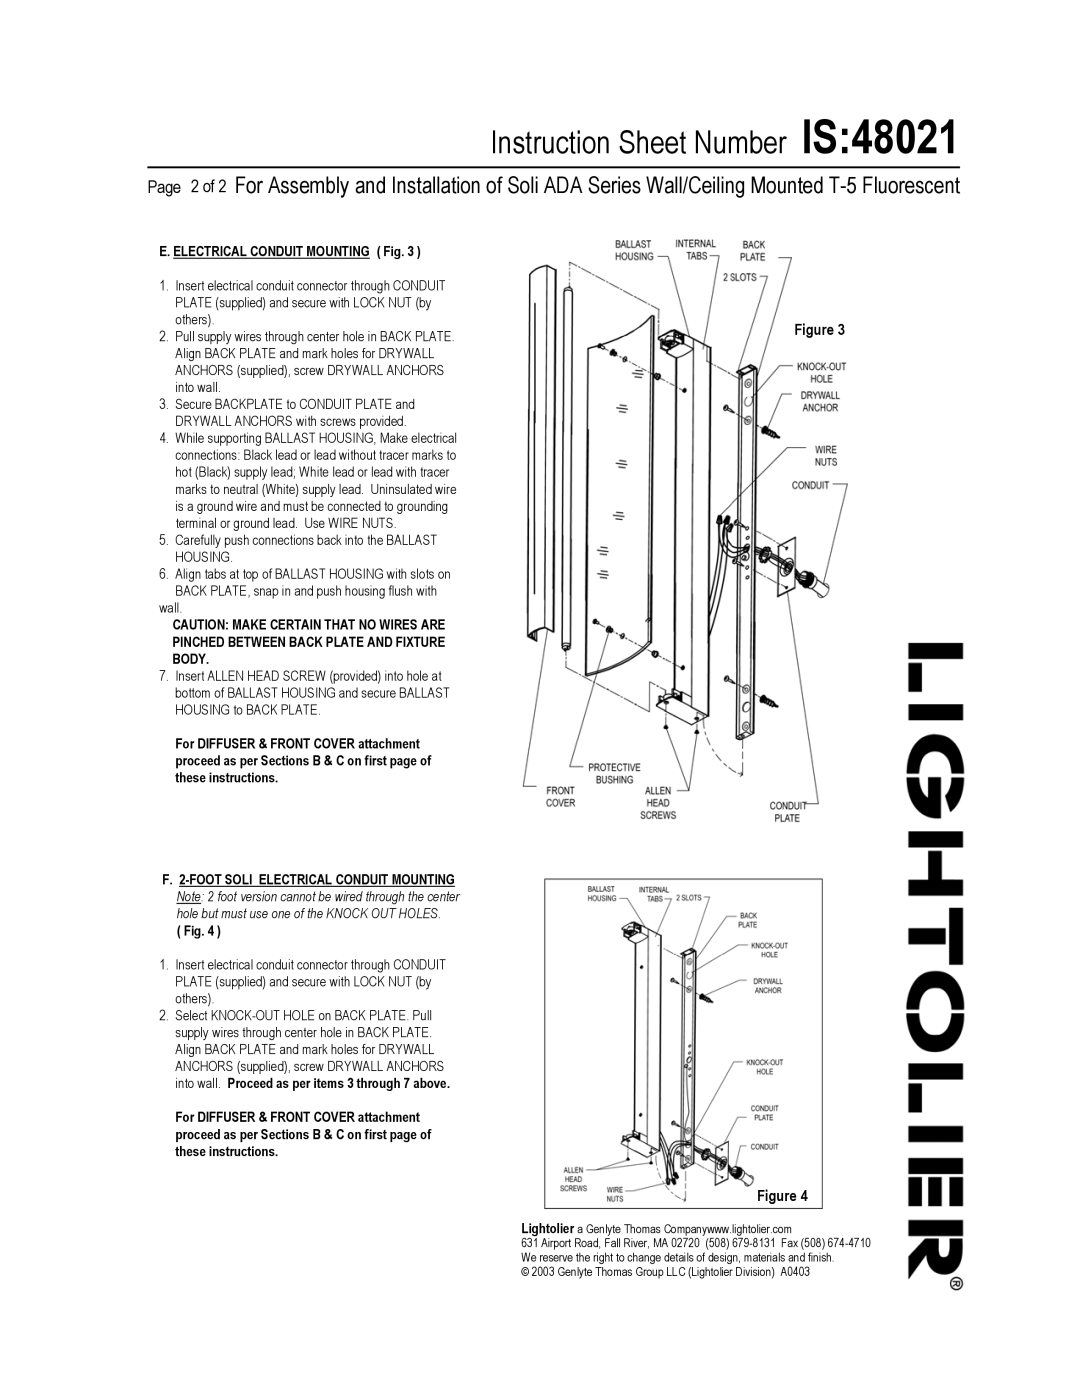 Lightolier IS:48021 instruction sheet Figure Figure, Instruction Sheet Number IS 